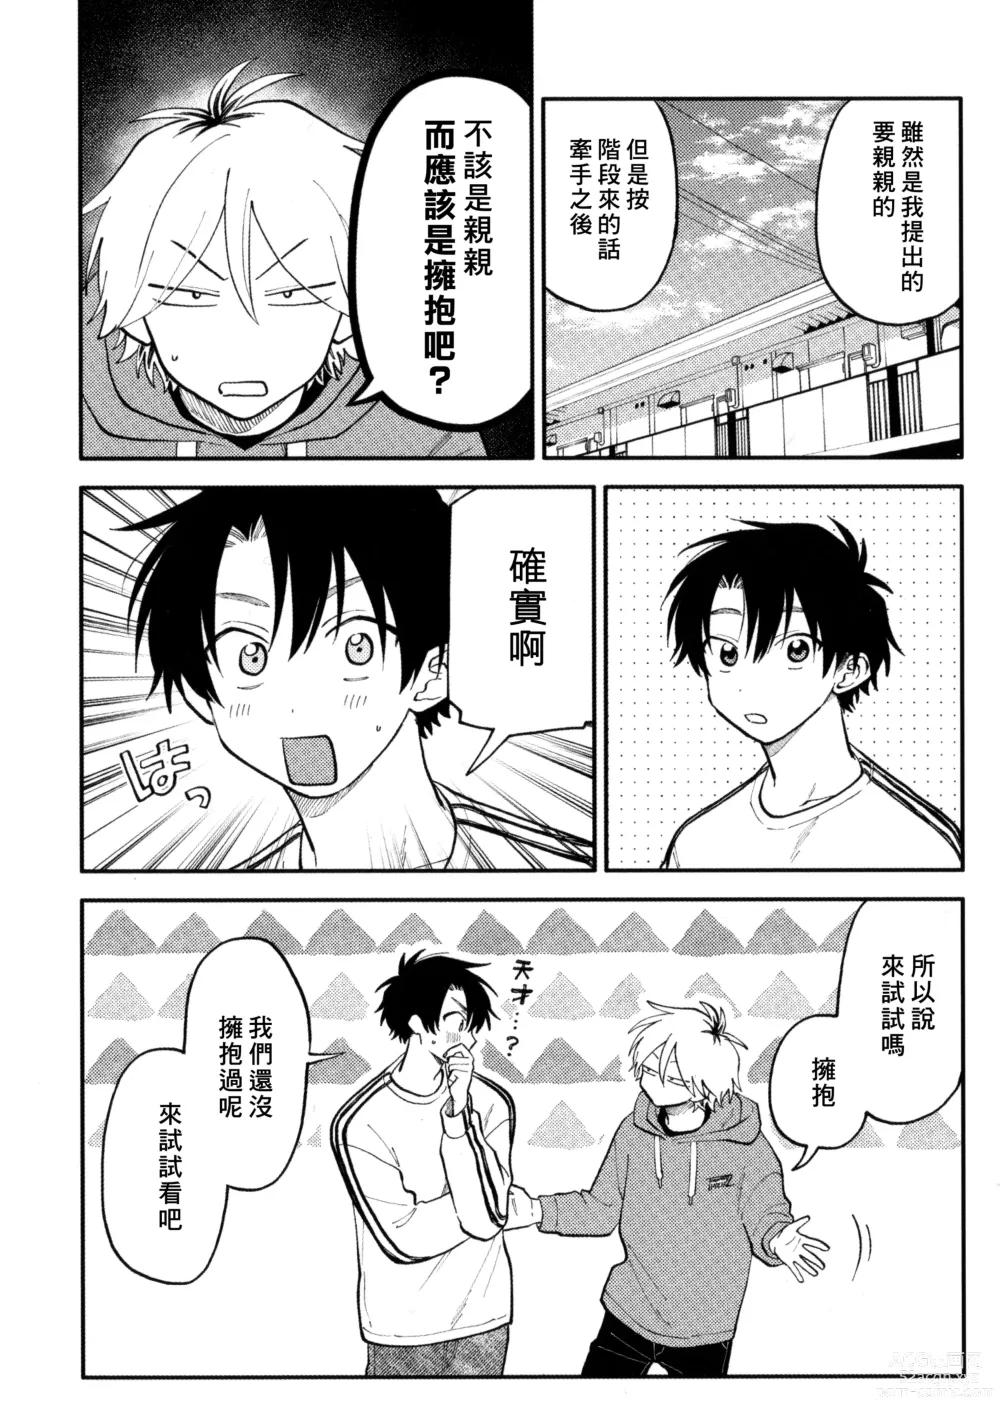 Page 236 of manga 北山君与南谷君